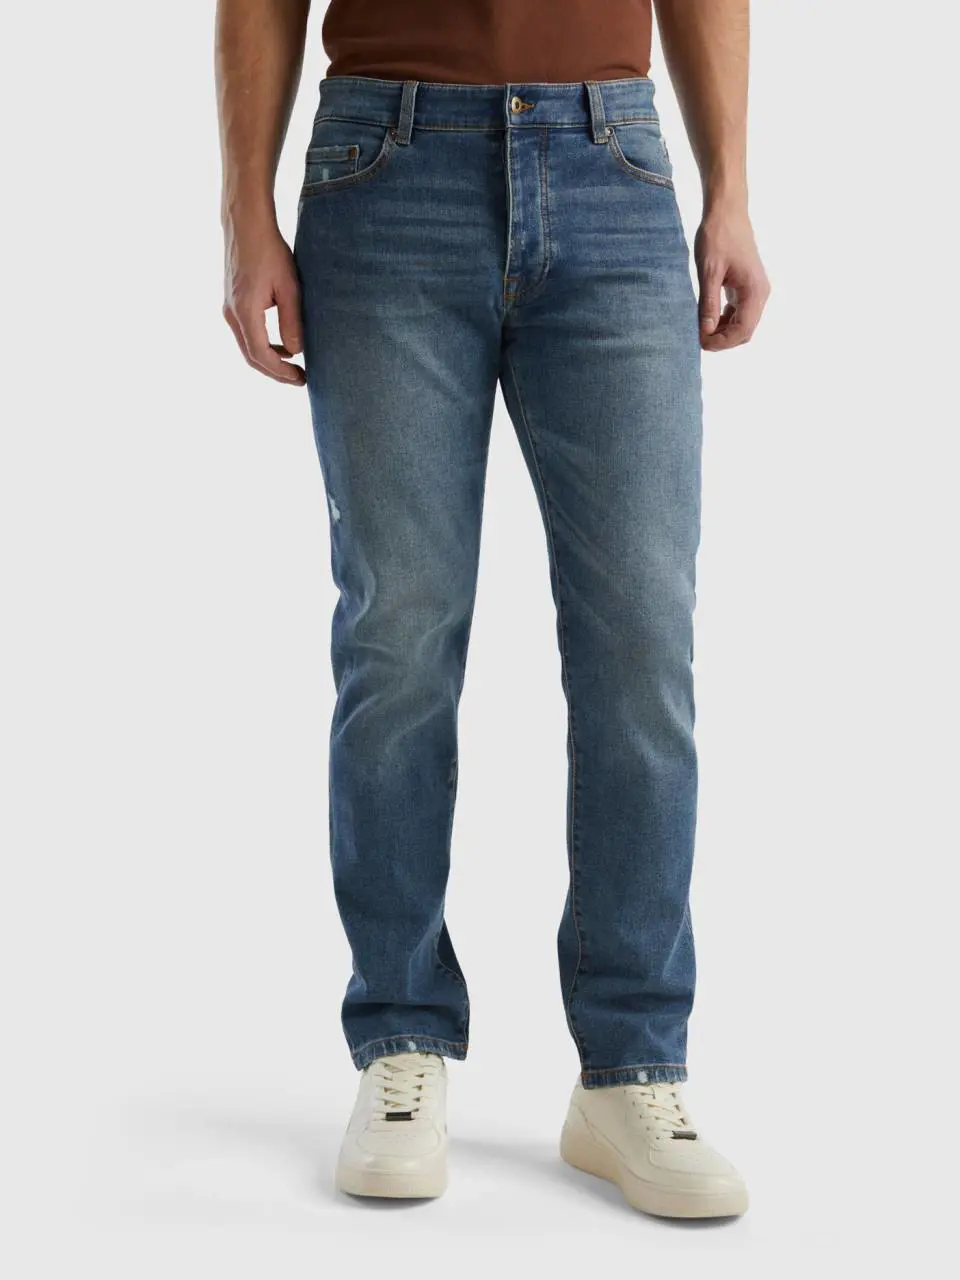 Benetton five pocket slim fit jeans. 1